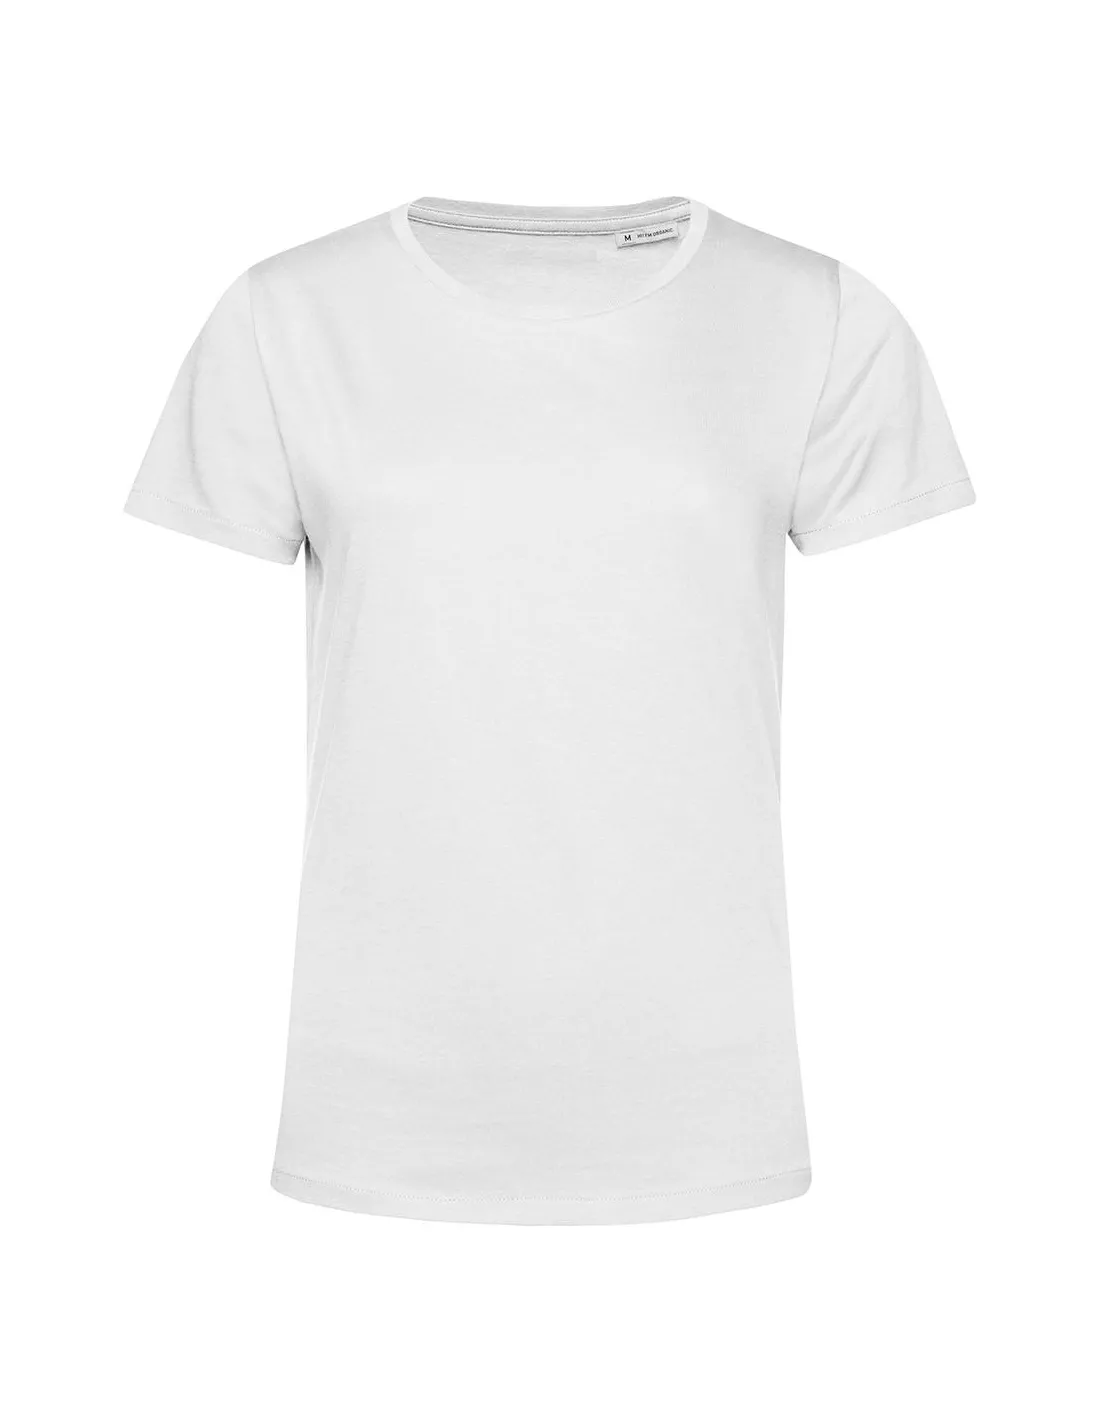 Camiseta orgánica E150 mujer